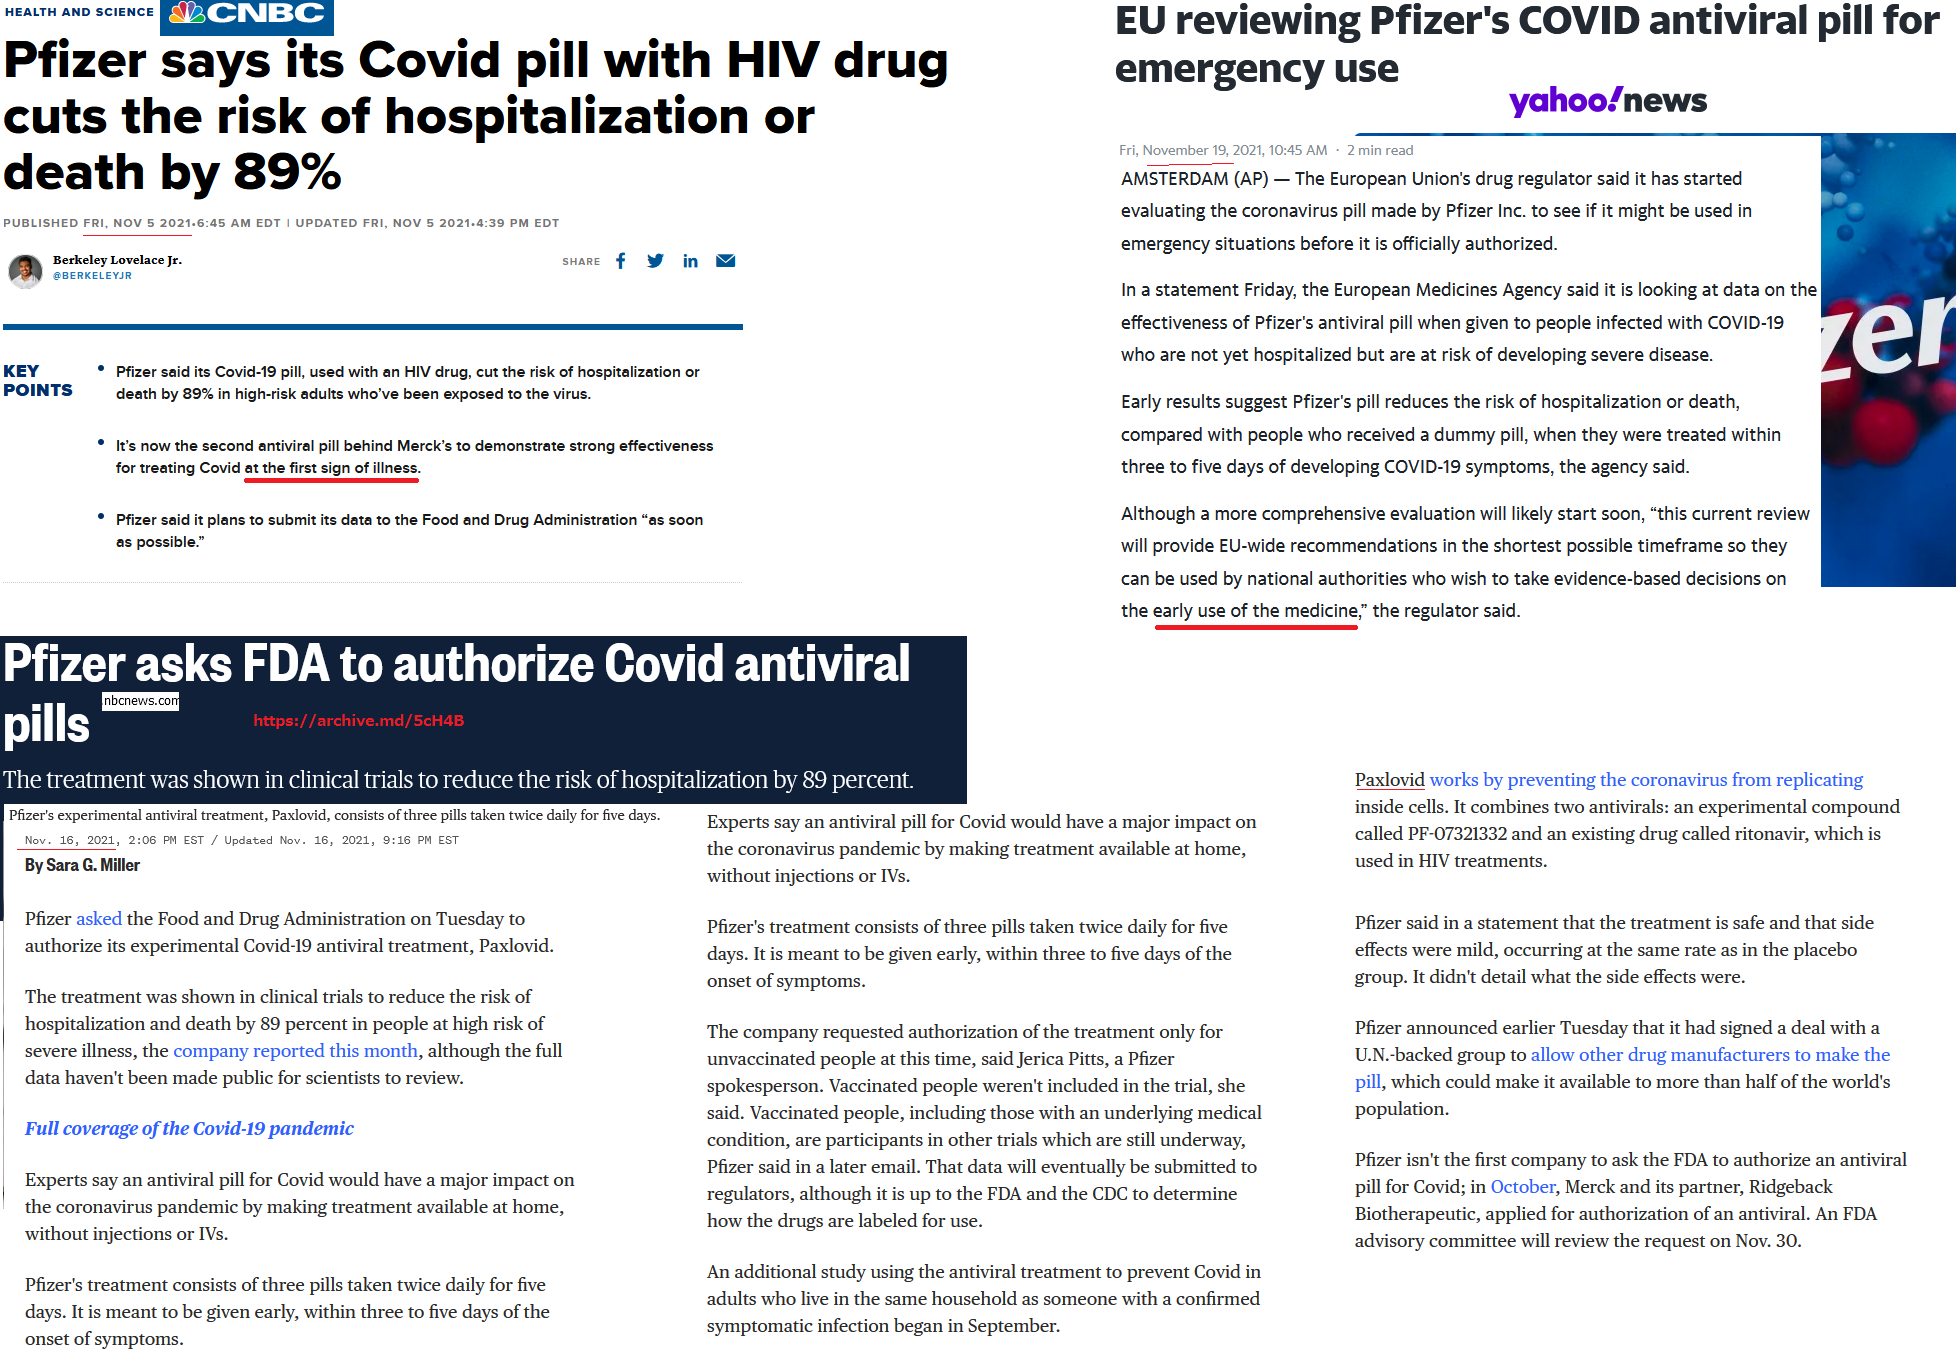 Paxlovid_Pfizer's experimental new Covid treatment drug.png